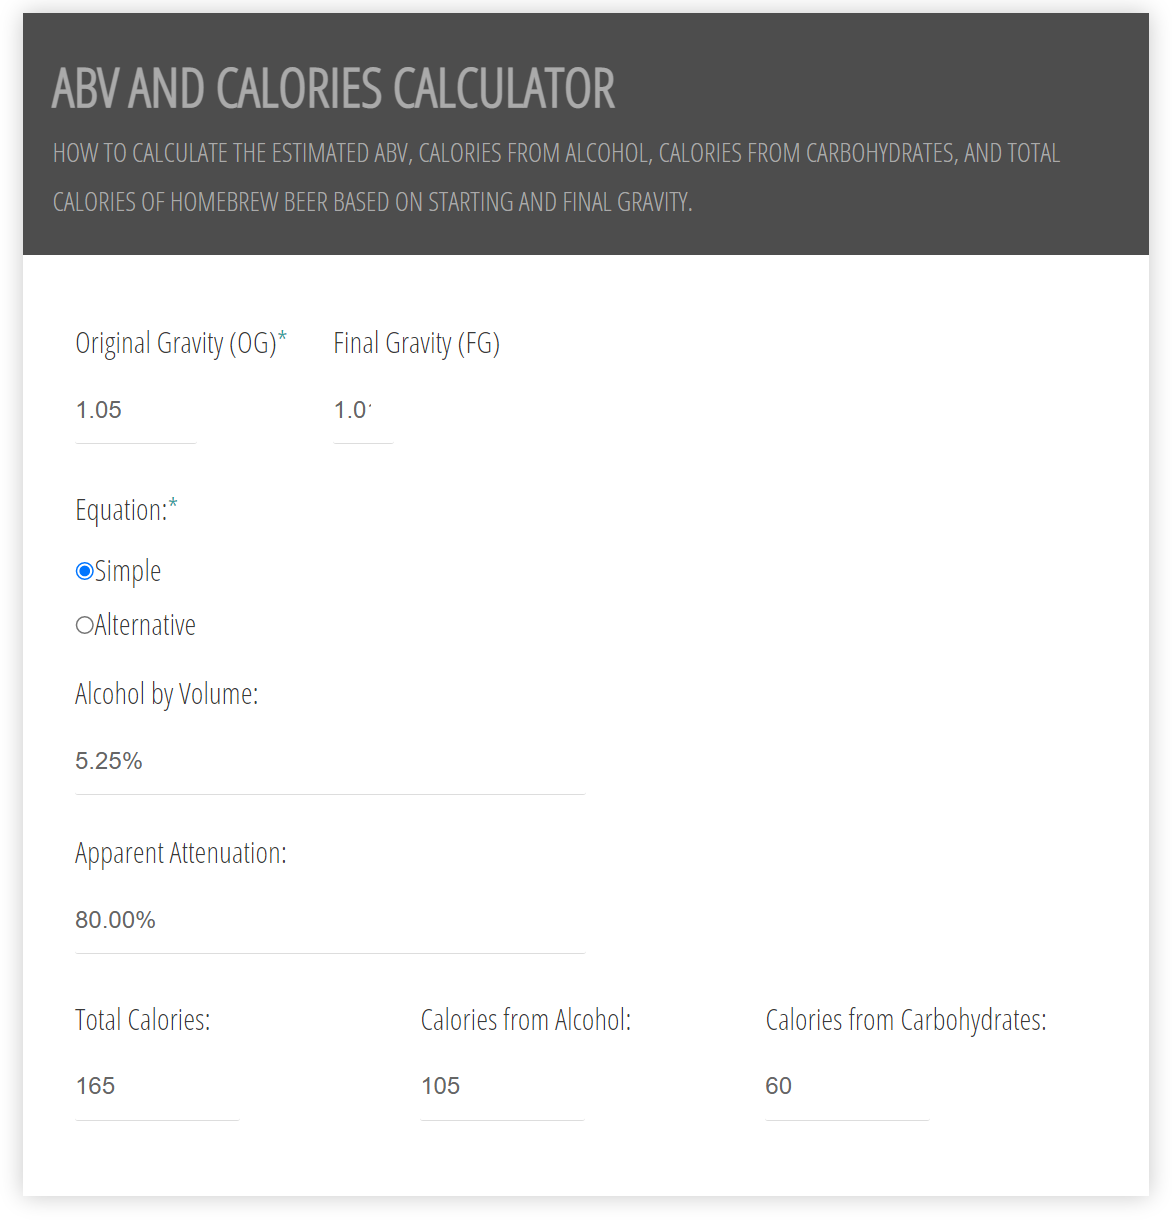 ABV Calculator (Alcohol By Volume) Based on Specific Gravity (OG & FG)